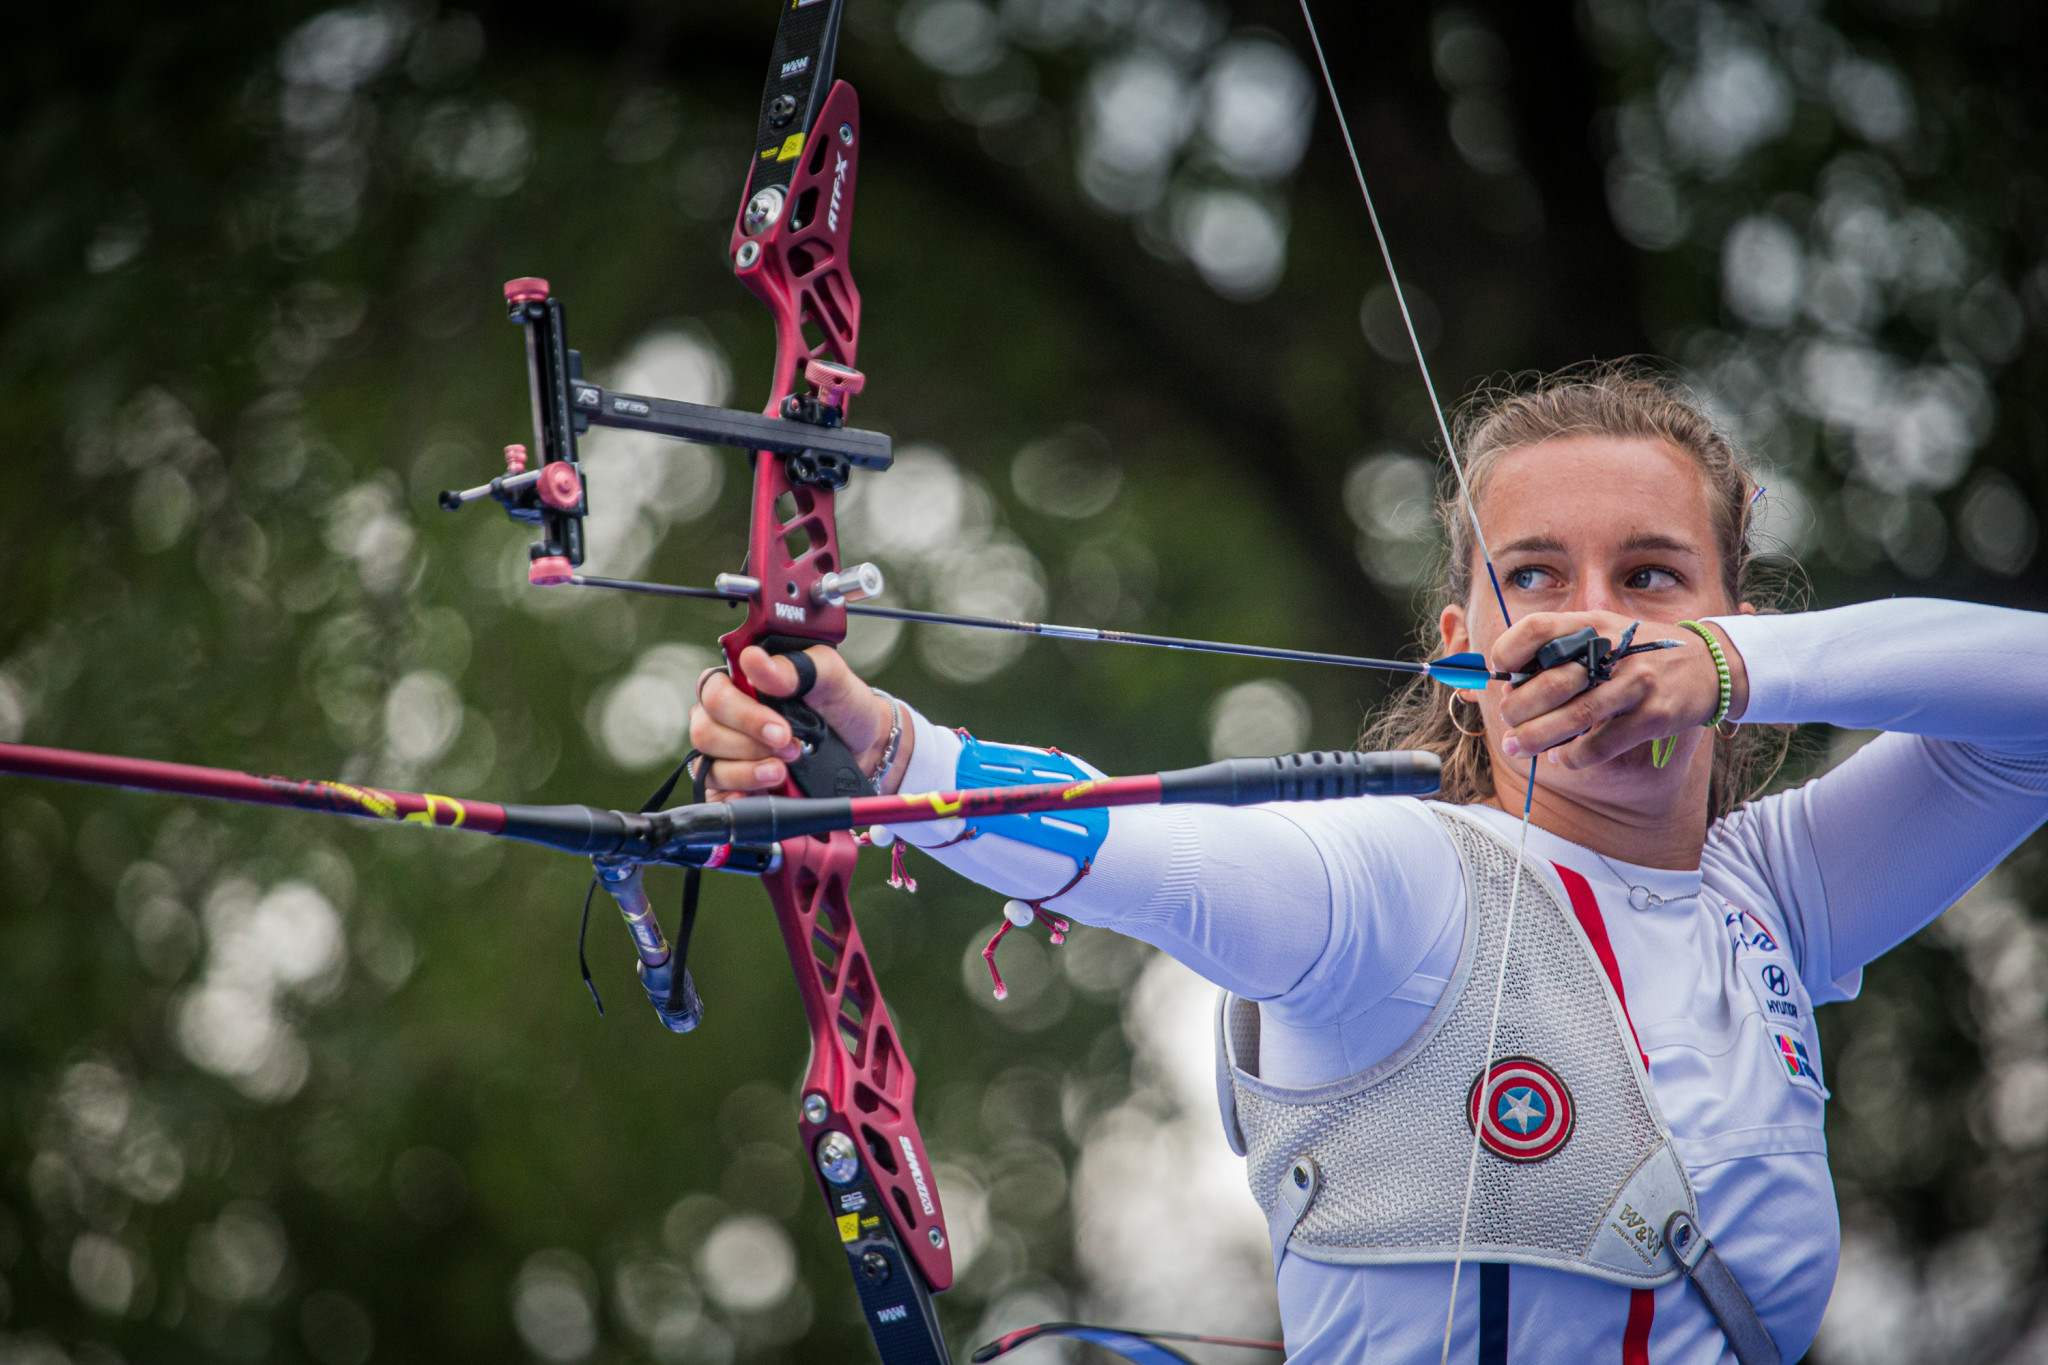 Noziglia secures second gold at European Indoor Archery Championships